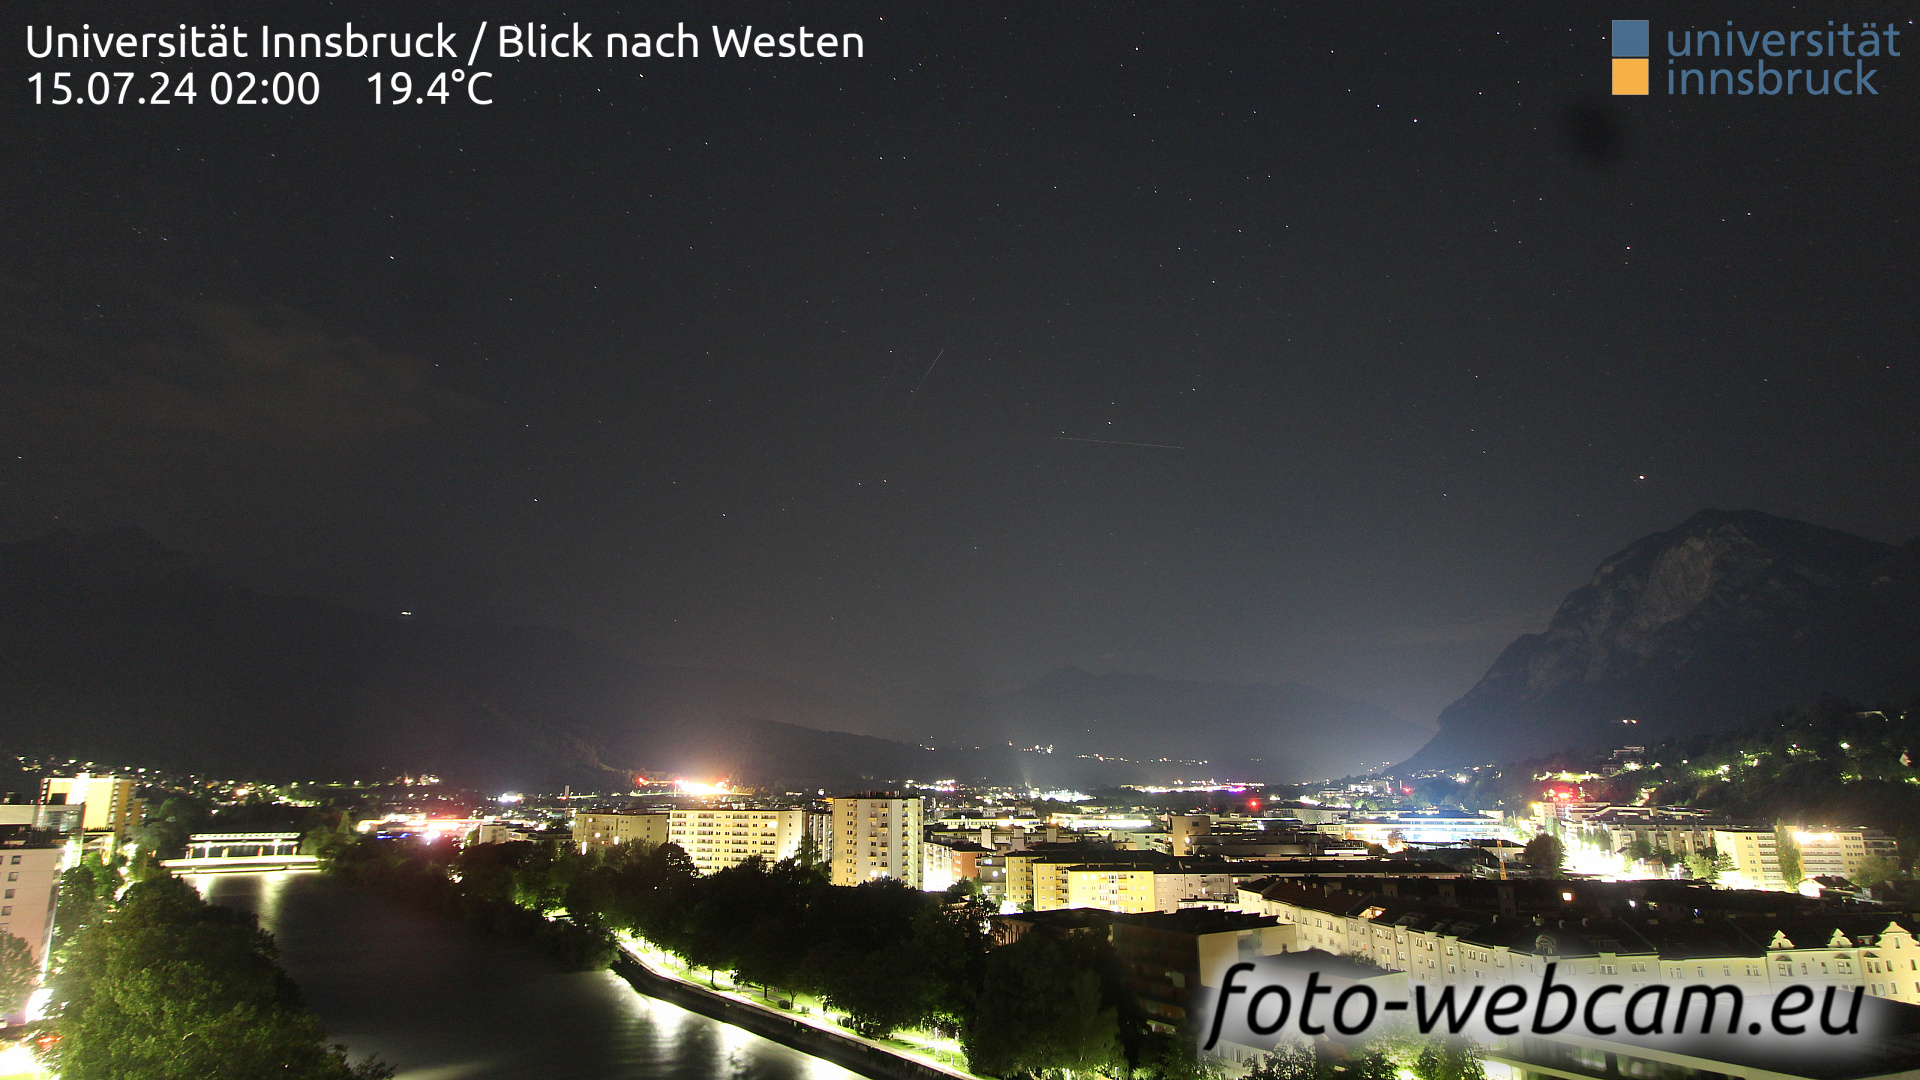 Innsbruck Man. 02:17